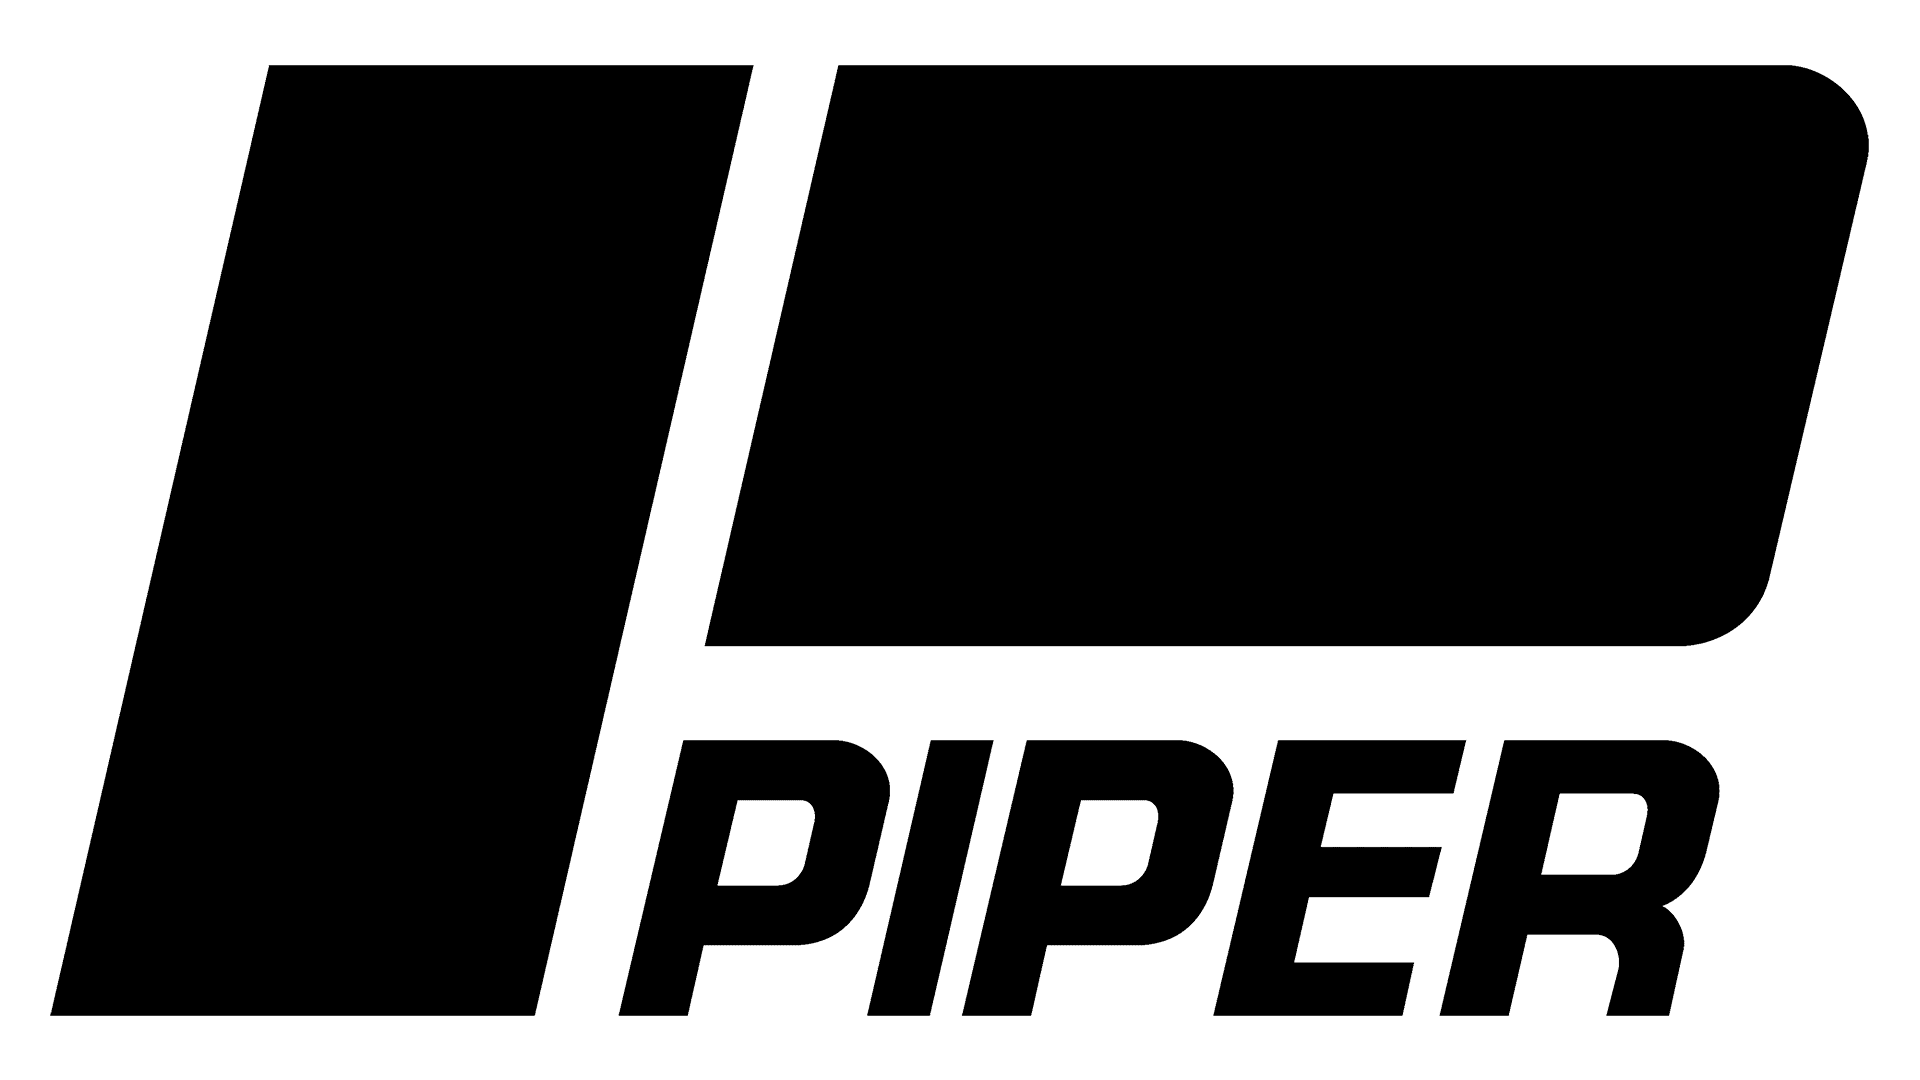 Stc group. Dla Piper logo. Dla Piper Rus Limited логотип. Piper Pipe logo. Дла Пайпер рус Лимитед.